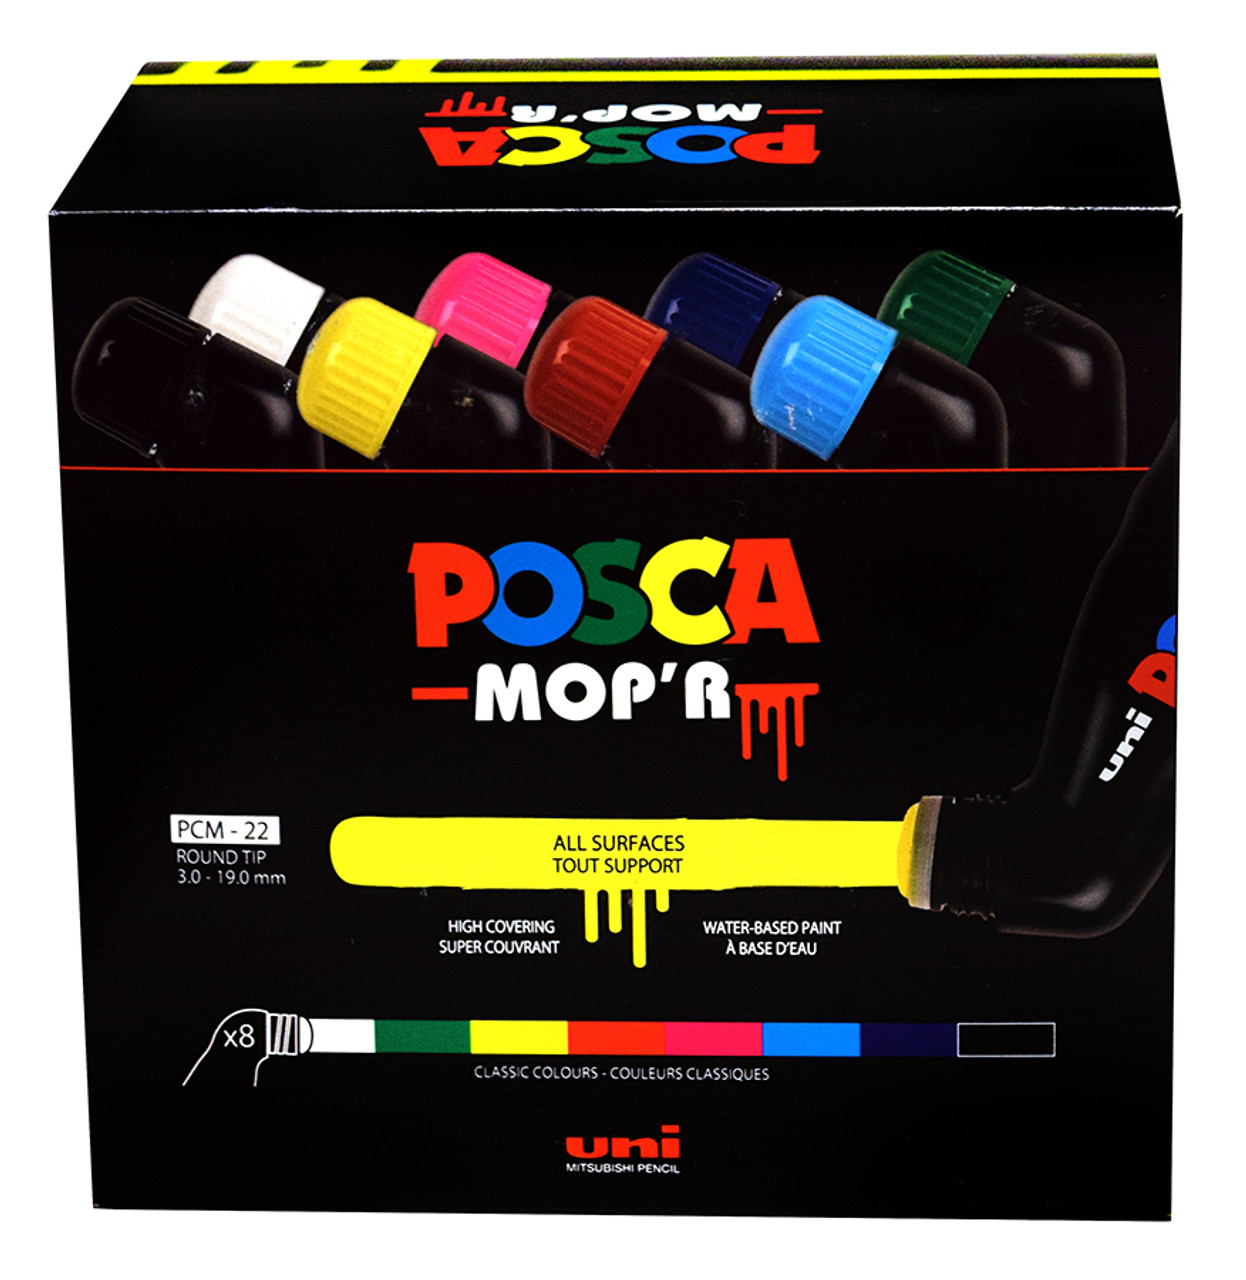 Posca Markers Bold Point 8K - 8 Color Set